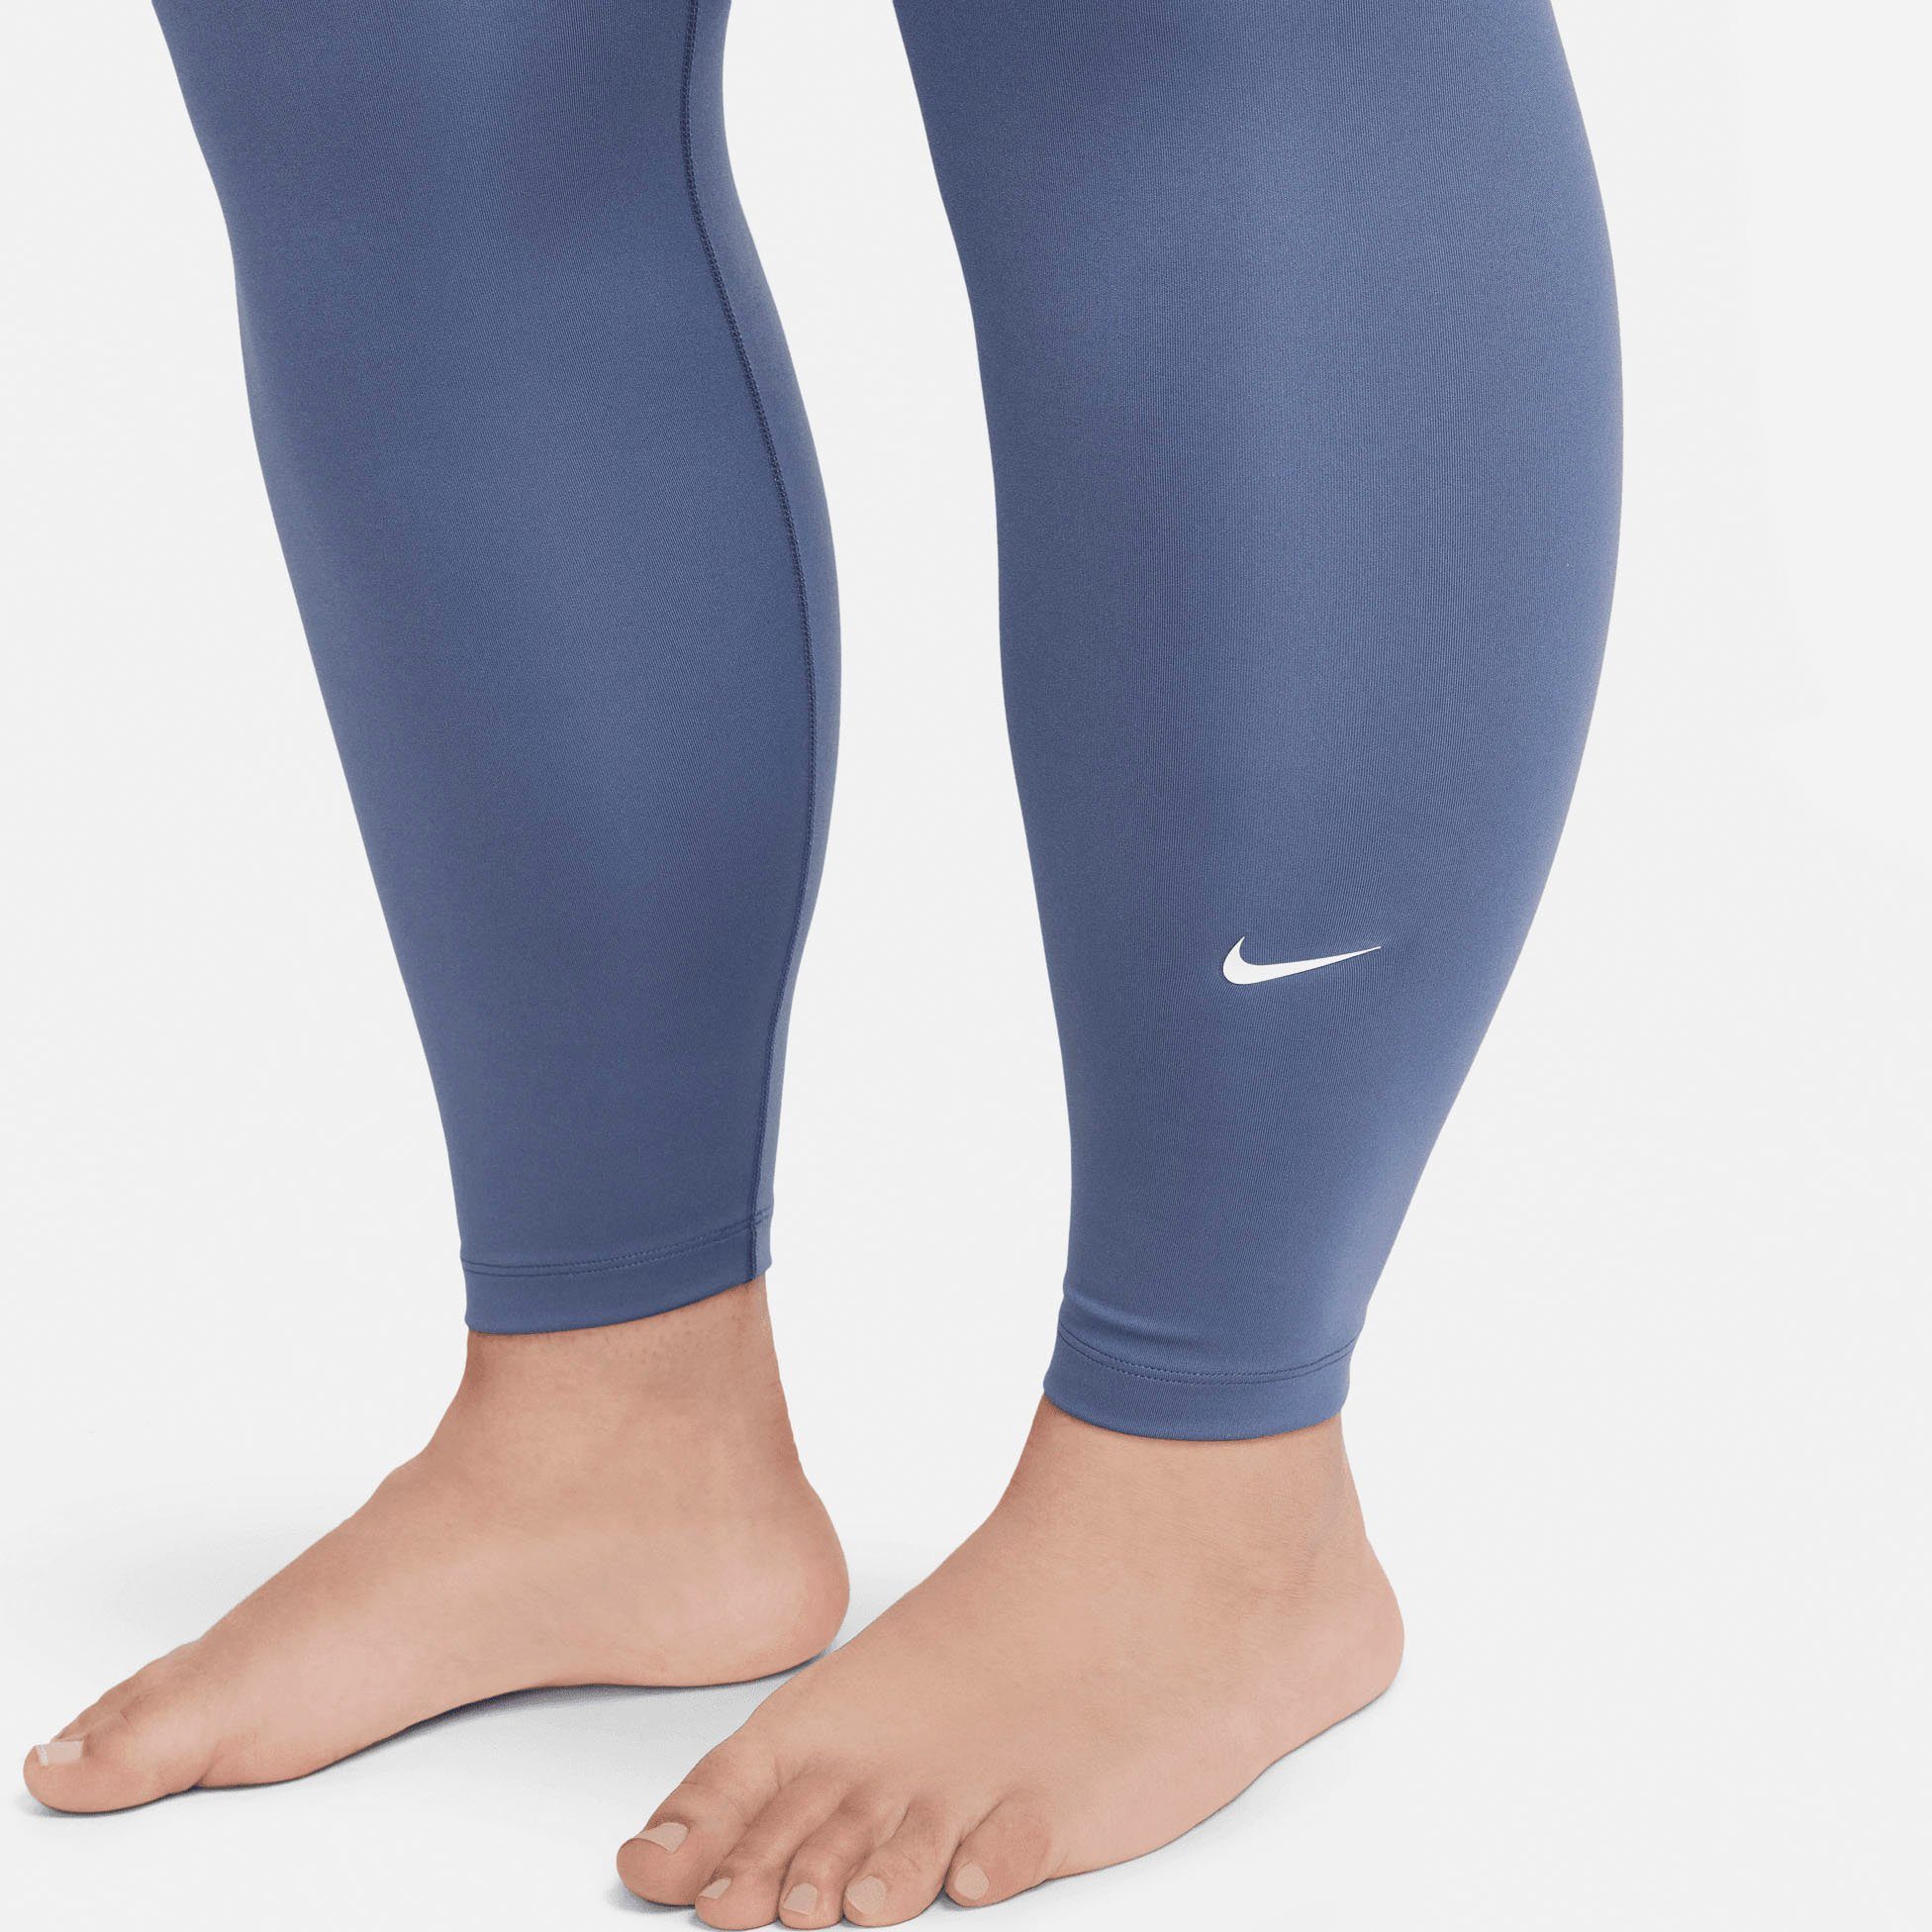 Size) Leggings Nike Trainingstights Women's blau (Plus Mid-Rise One